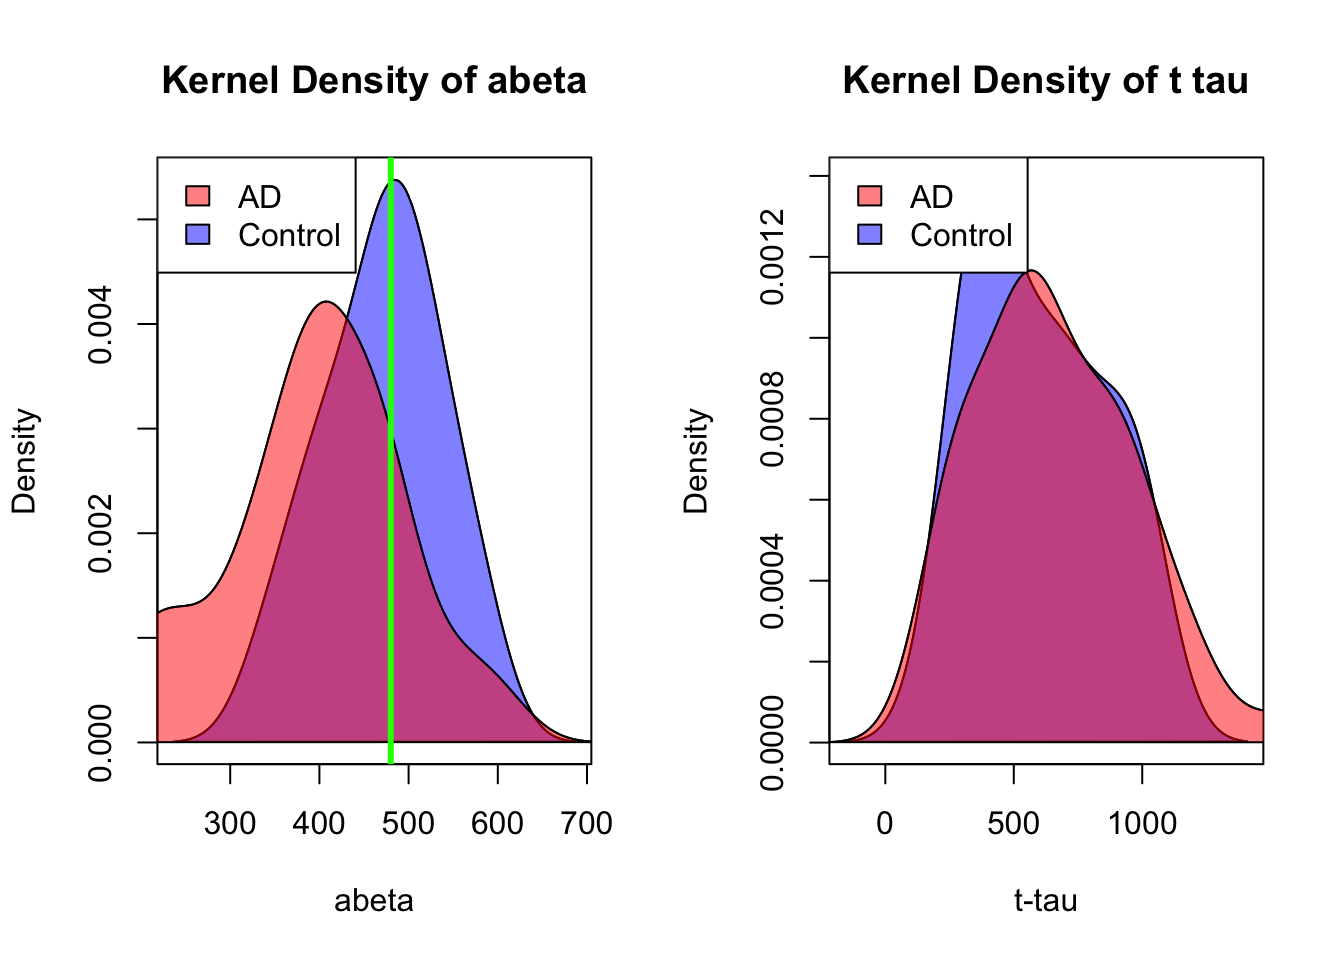 Distribution of abeta and t tau for data points with abeta<610.